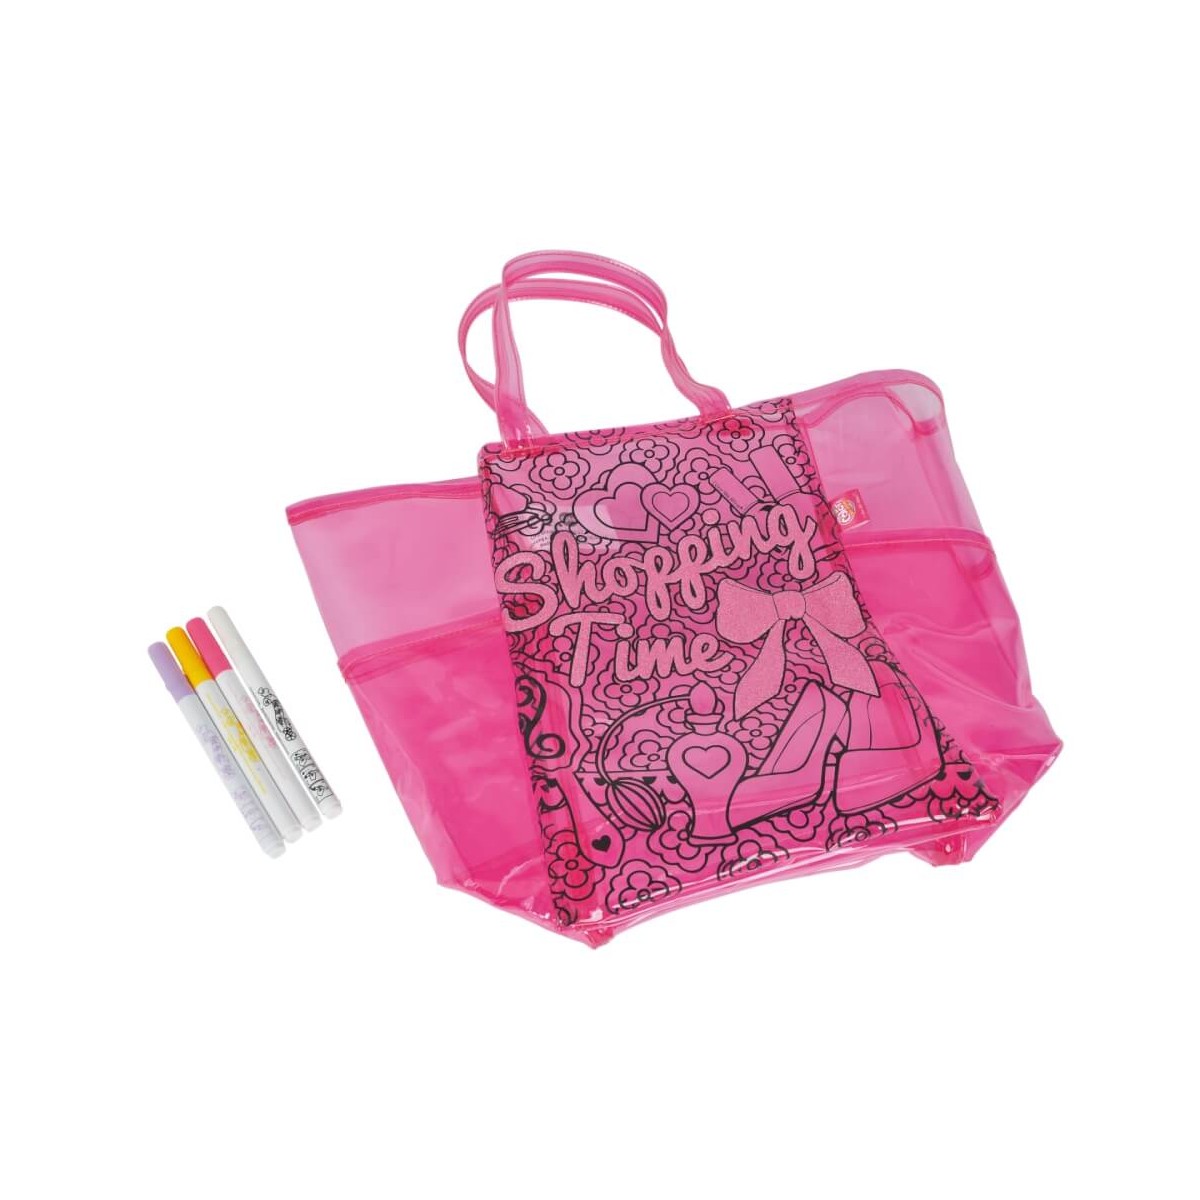 Simba - Color me Mine - Diamond Summer Party Fashionbag